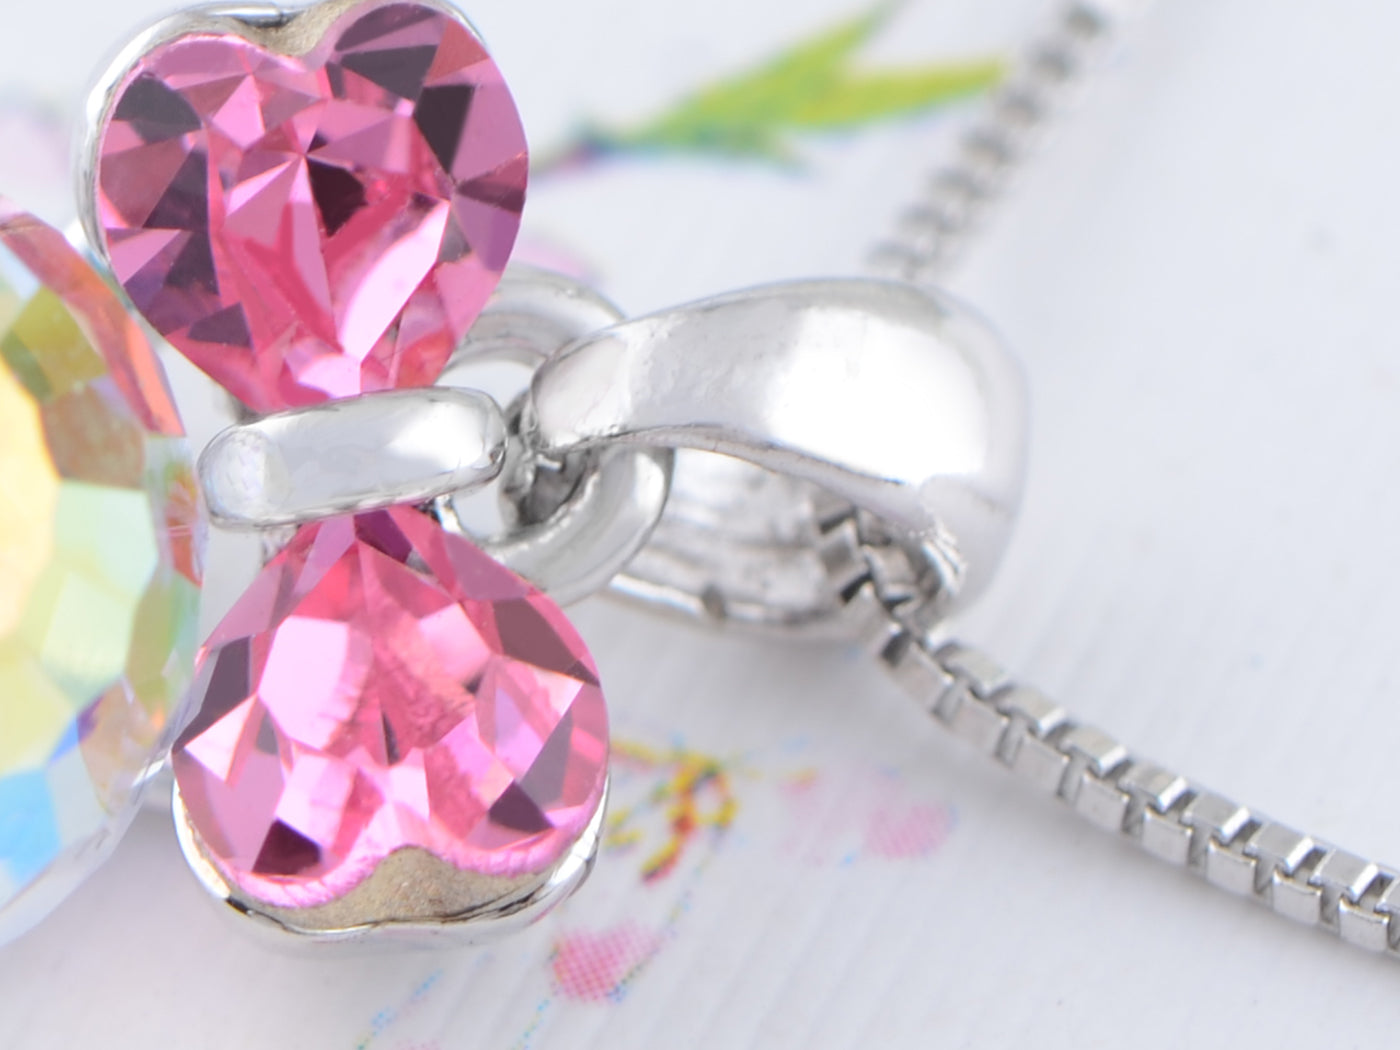 Swarovski Crystal Pink Fuchsia Bow Girl Power Disco 70S Ball Ab Pendant Necklace